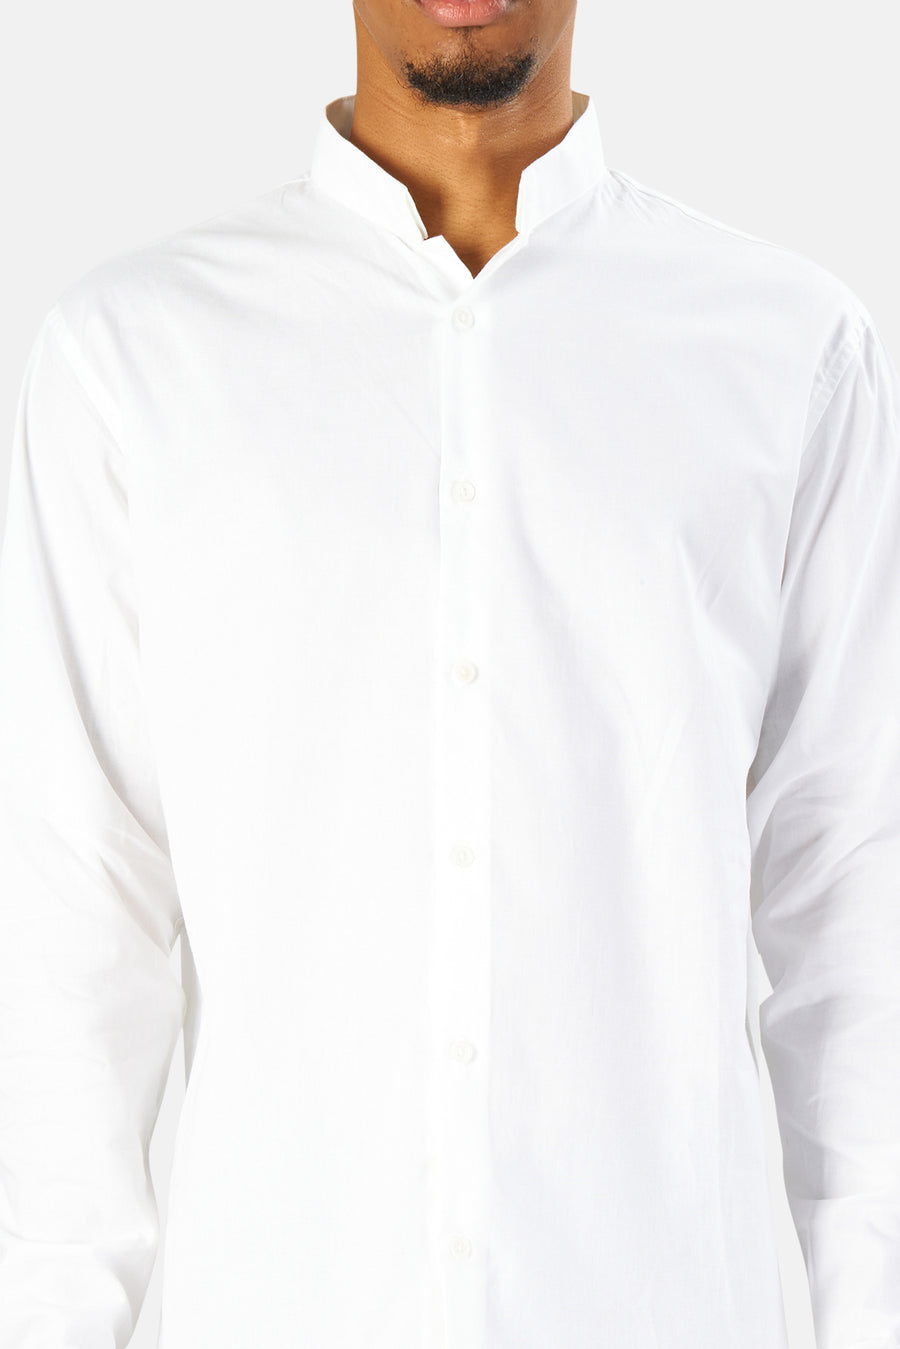 Dior Button Down Shirt White - blueandcream